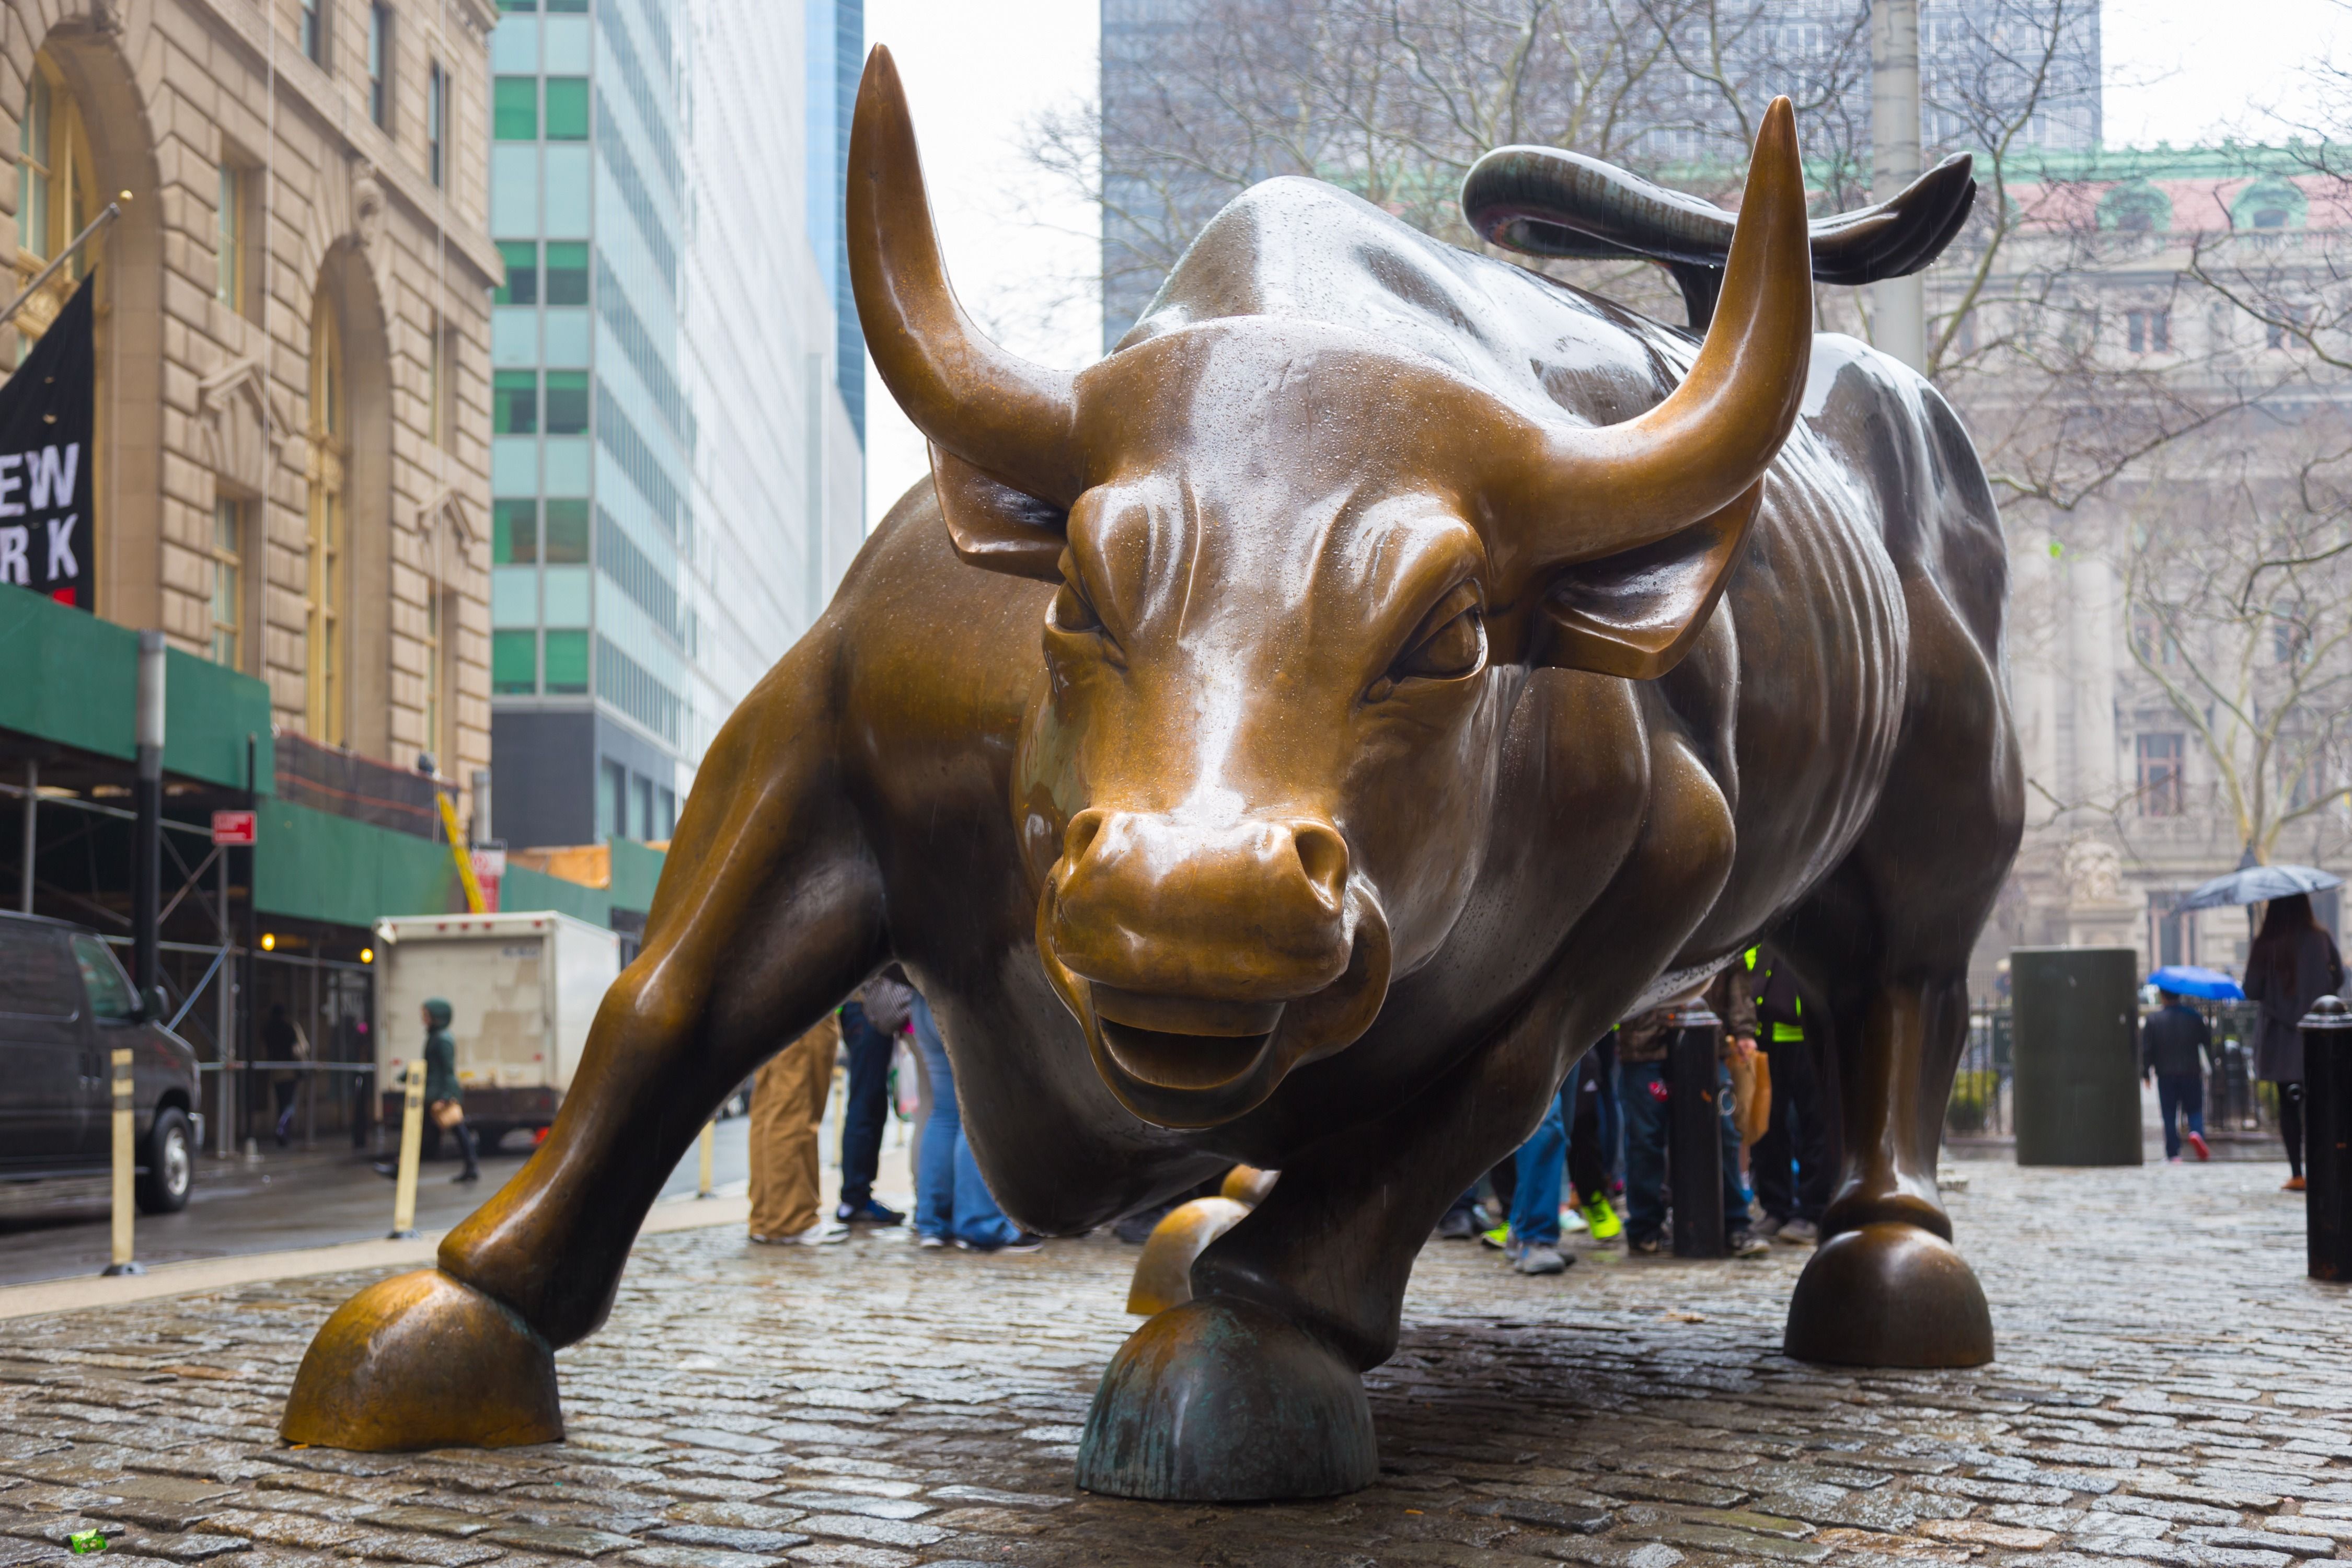 Wallpaper Charging Bull, Wall Street Bull, Bowling Green Bull